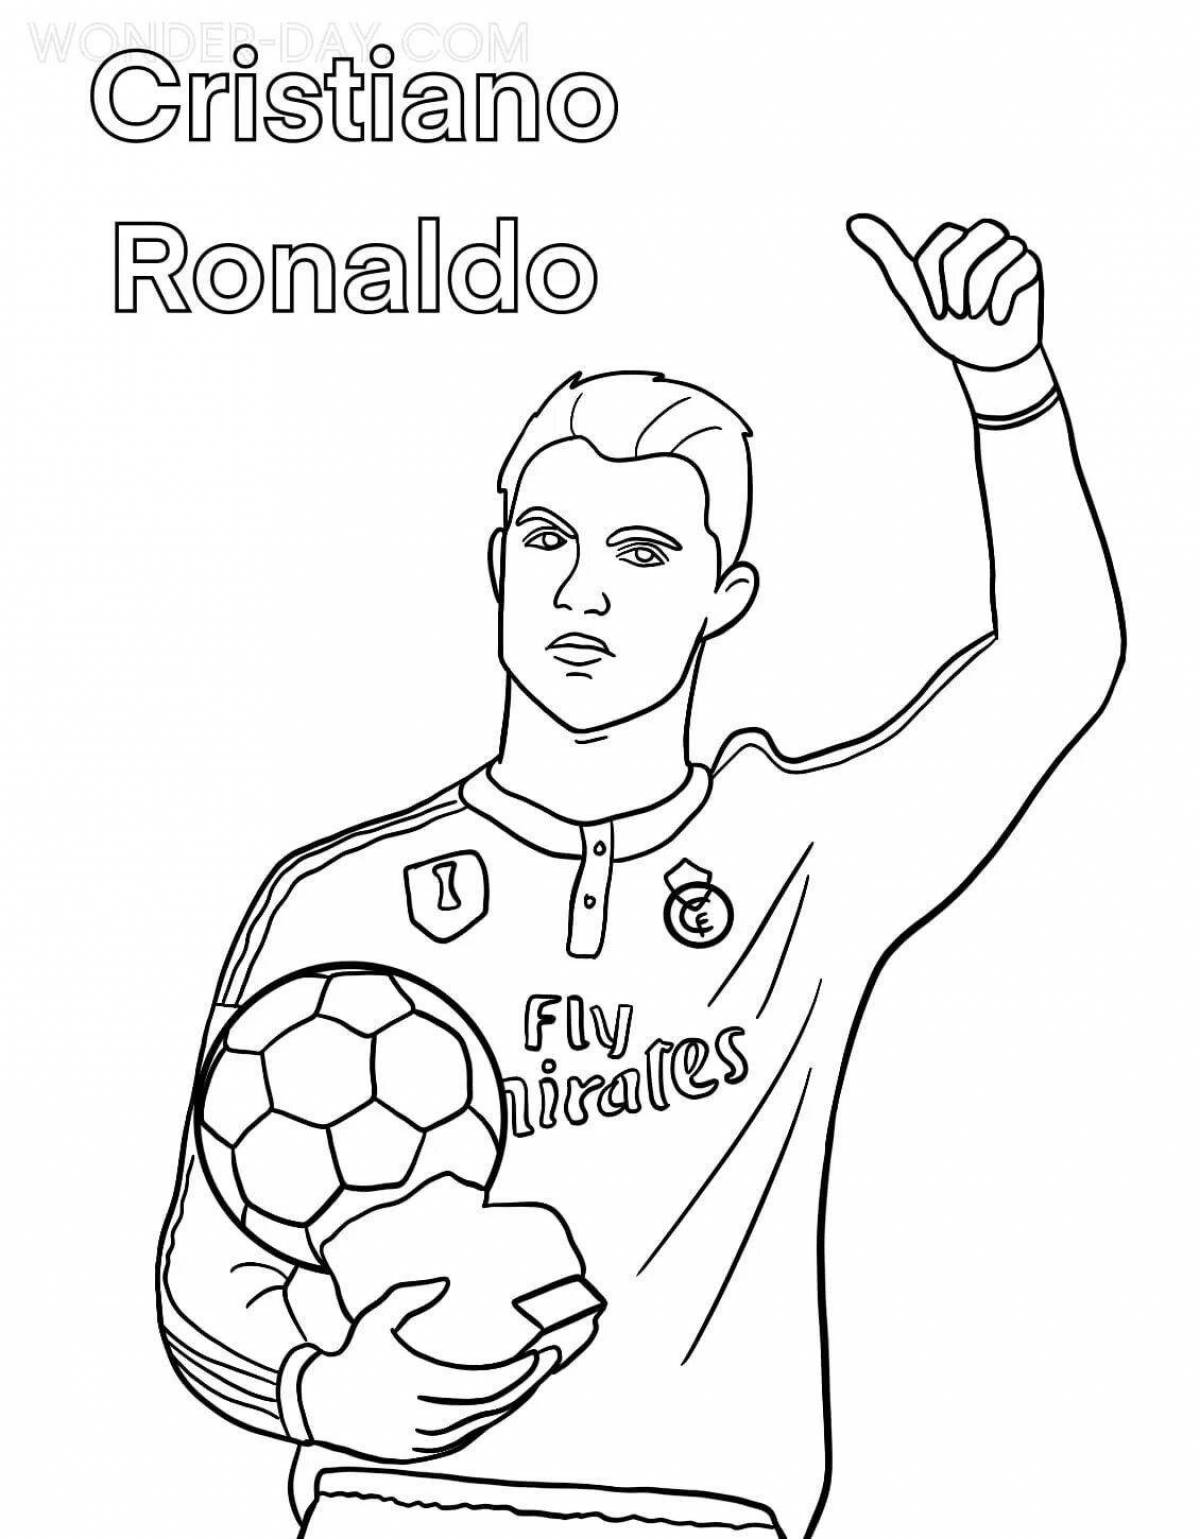 Football player ronaldo #5